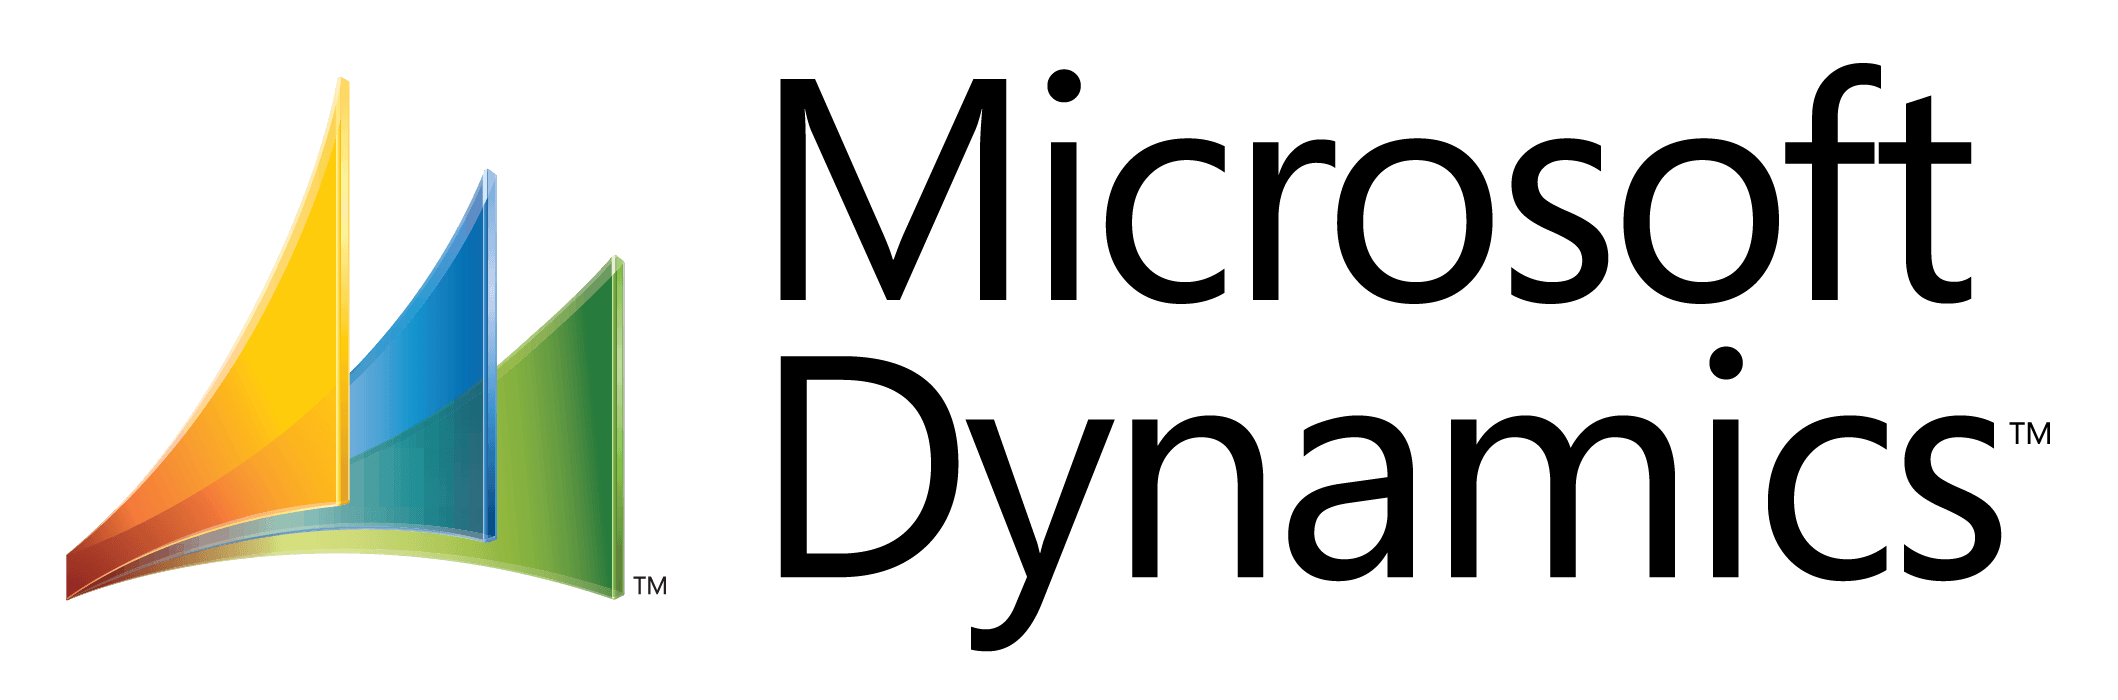 MS Dynamics Logo - MS-Dynamics-Logo-02 - Lemon Learning